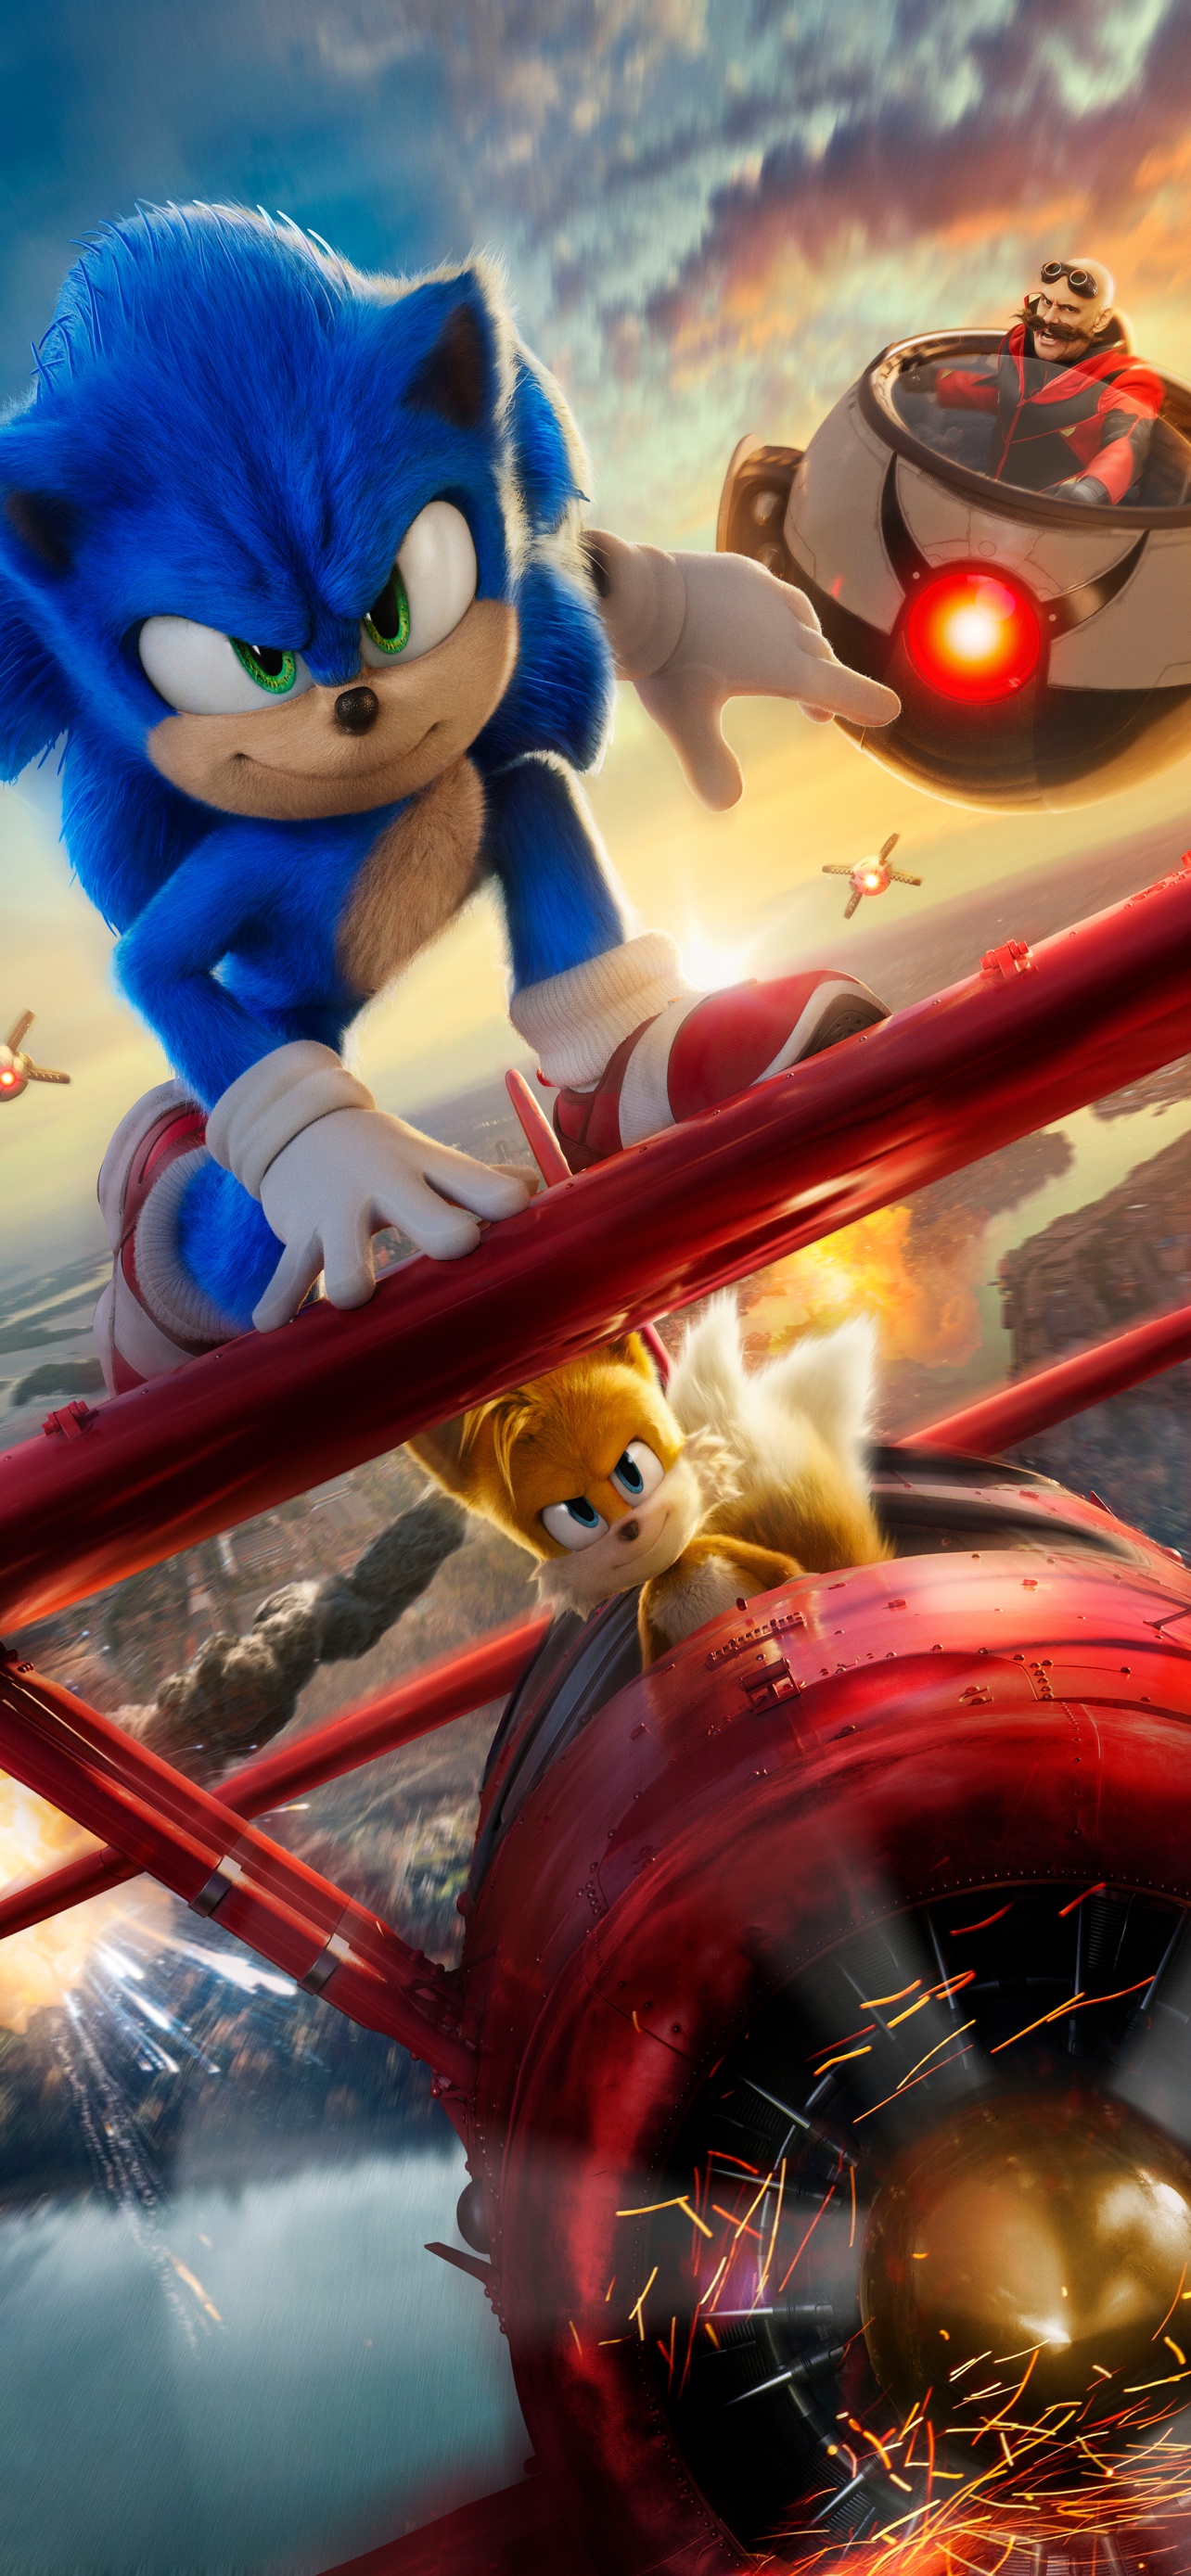 Sonic the Hedgehog 2 Wallpaper 4K, 2022 Movies, Adventure, Comedy, 5K, 8K, Movies